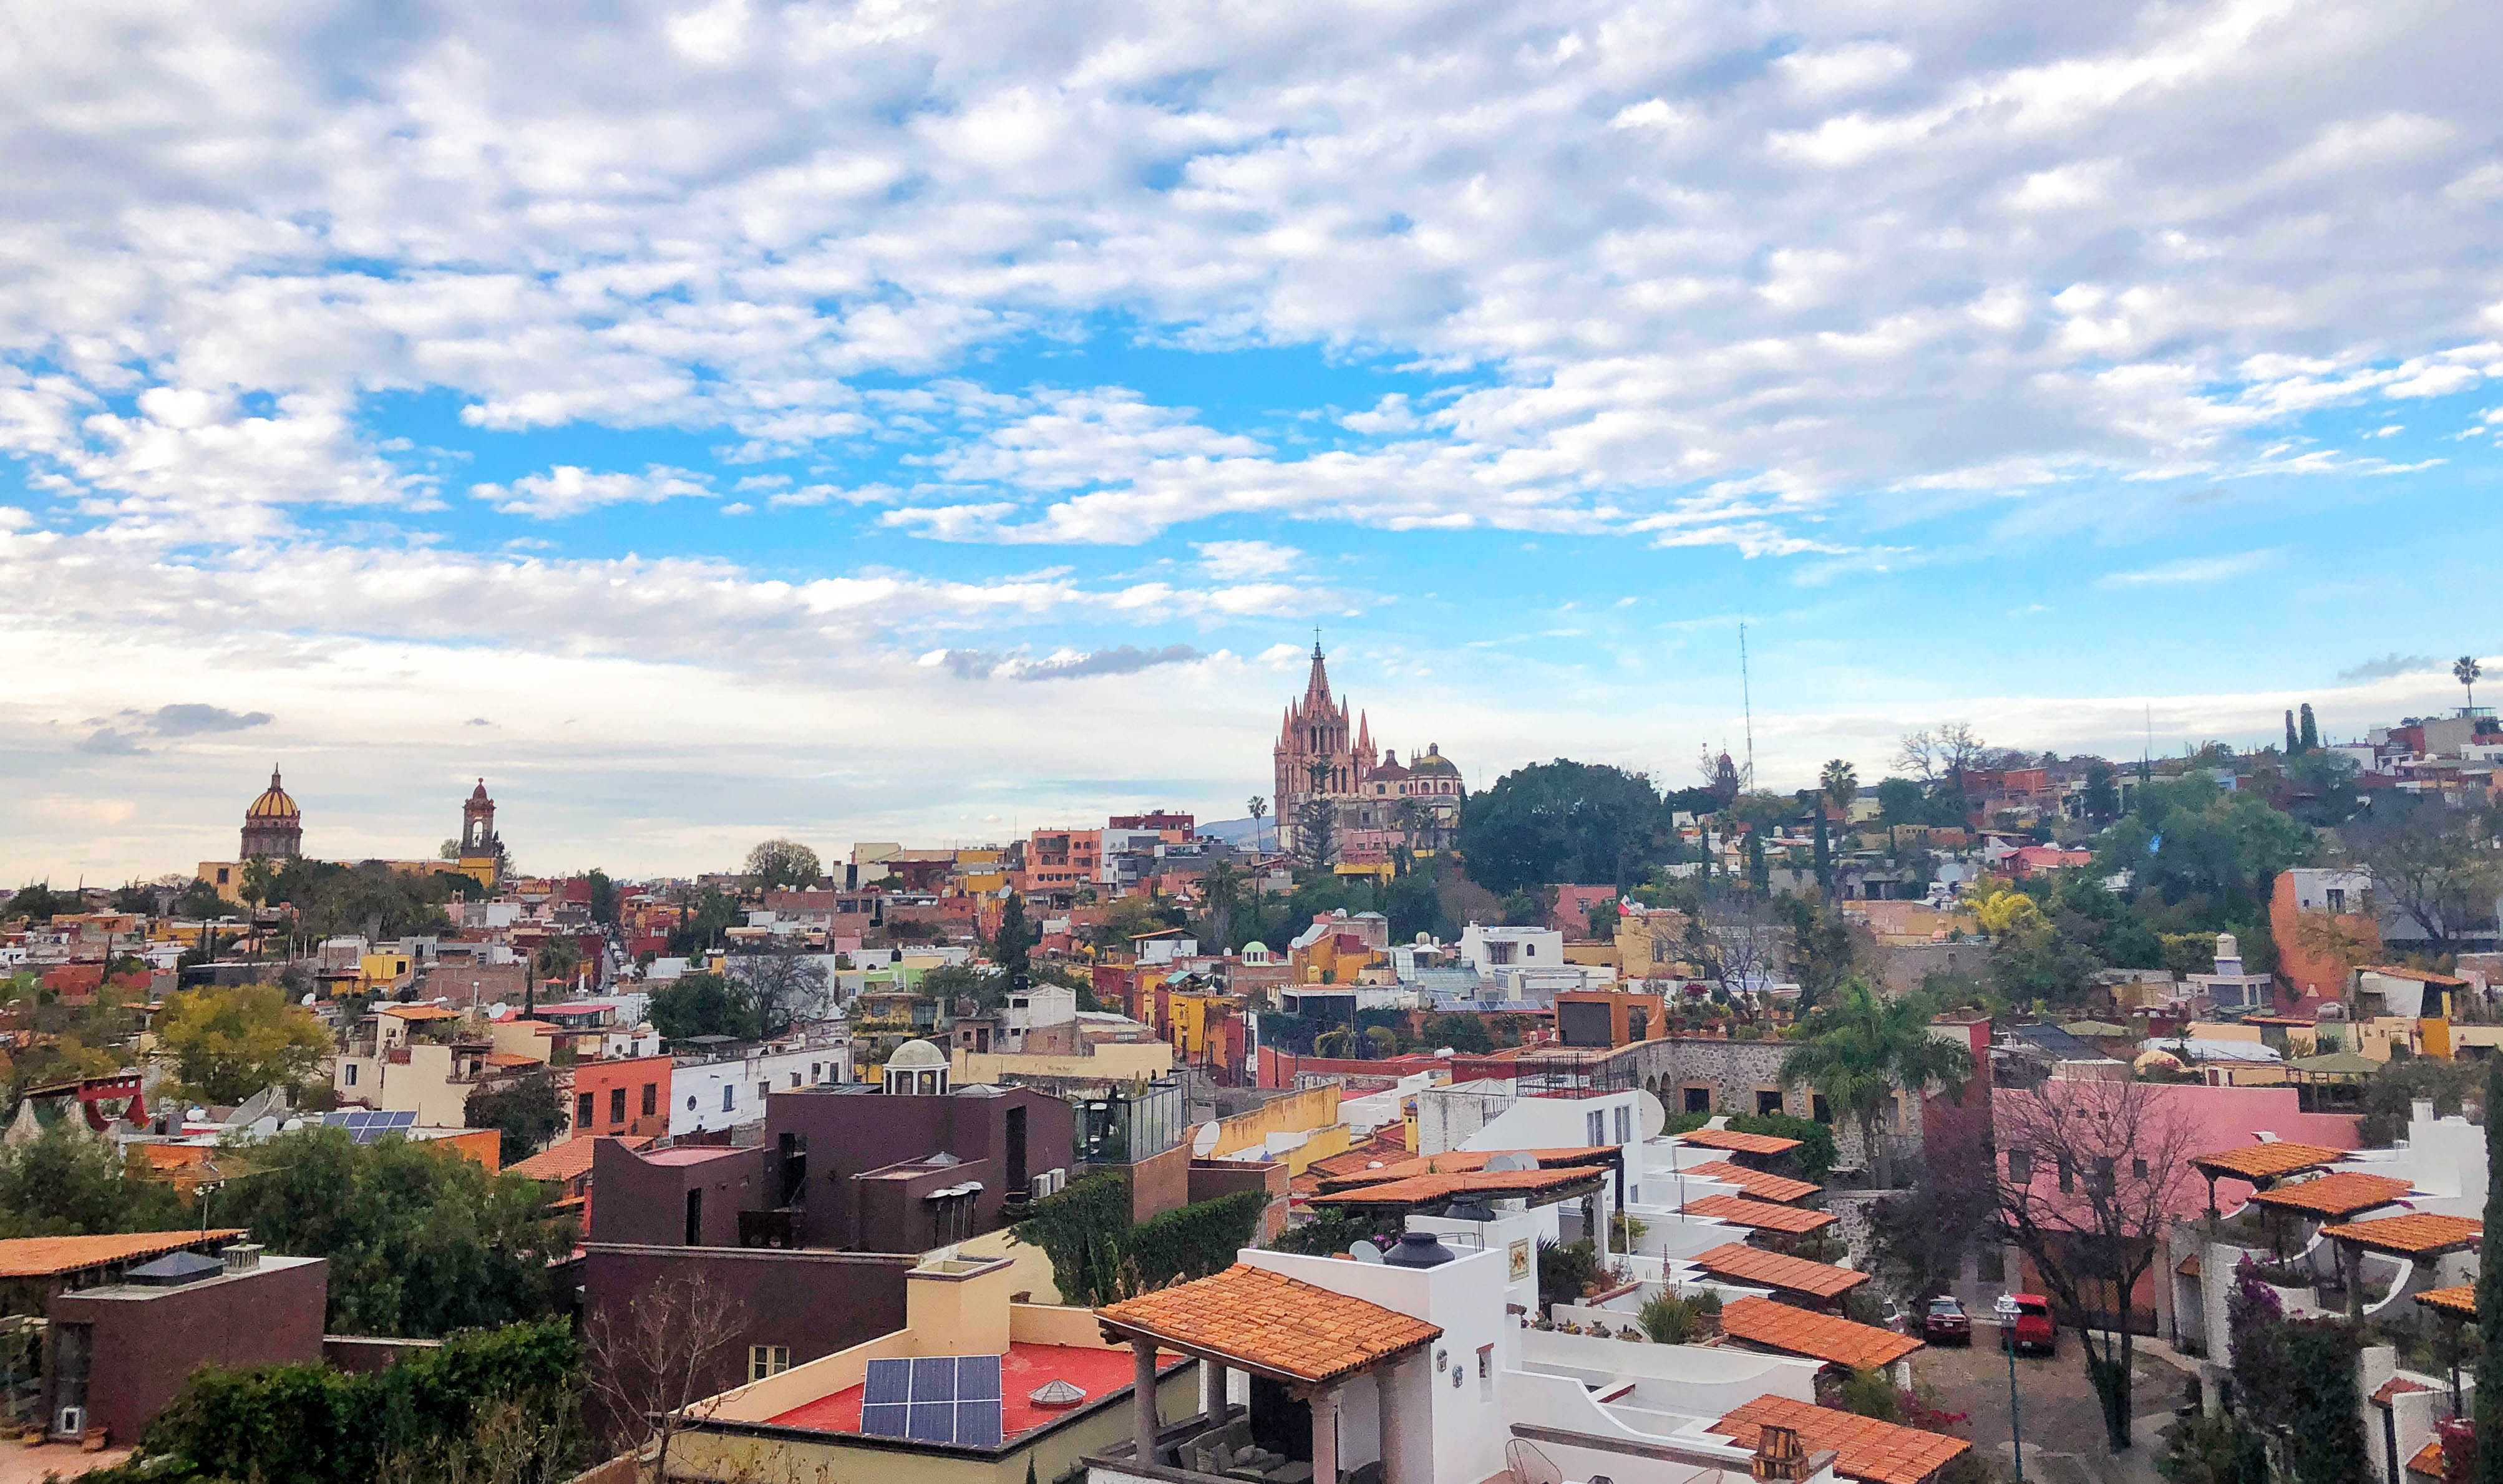 Rosewood San Miguel, San Miguel, Travel Blogger, Mexico, Visit Mexico, San Miguel Travel Guide